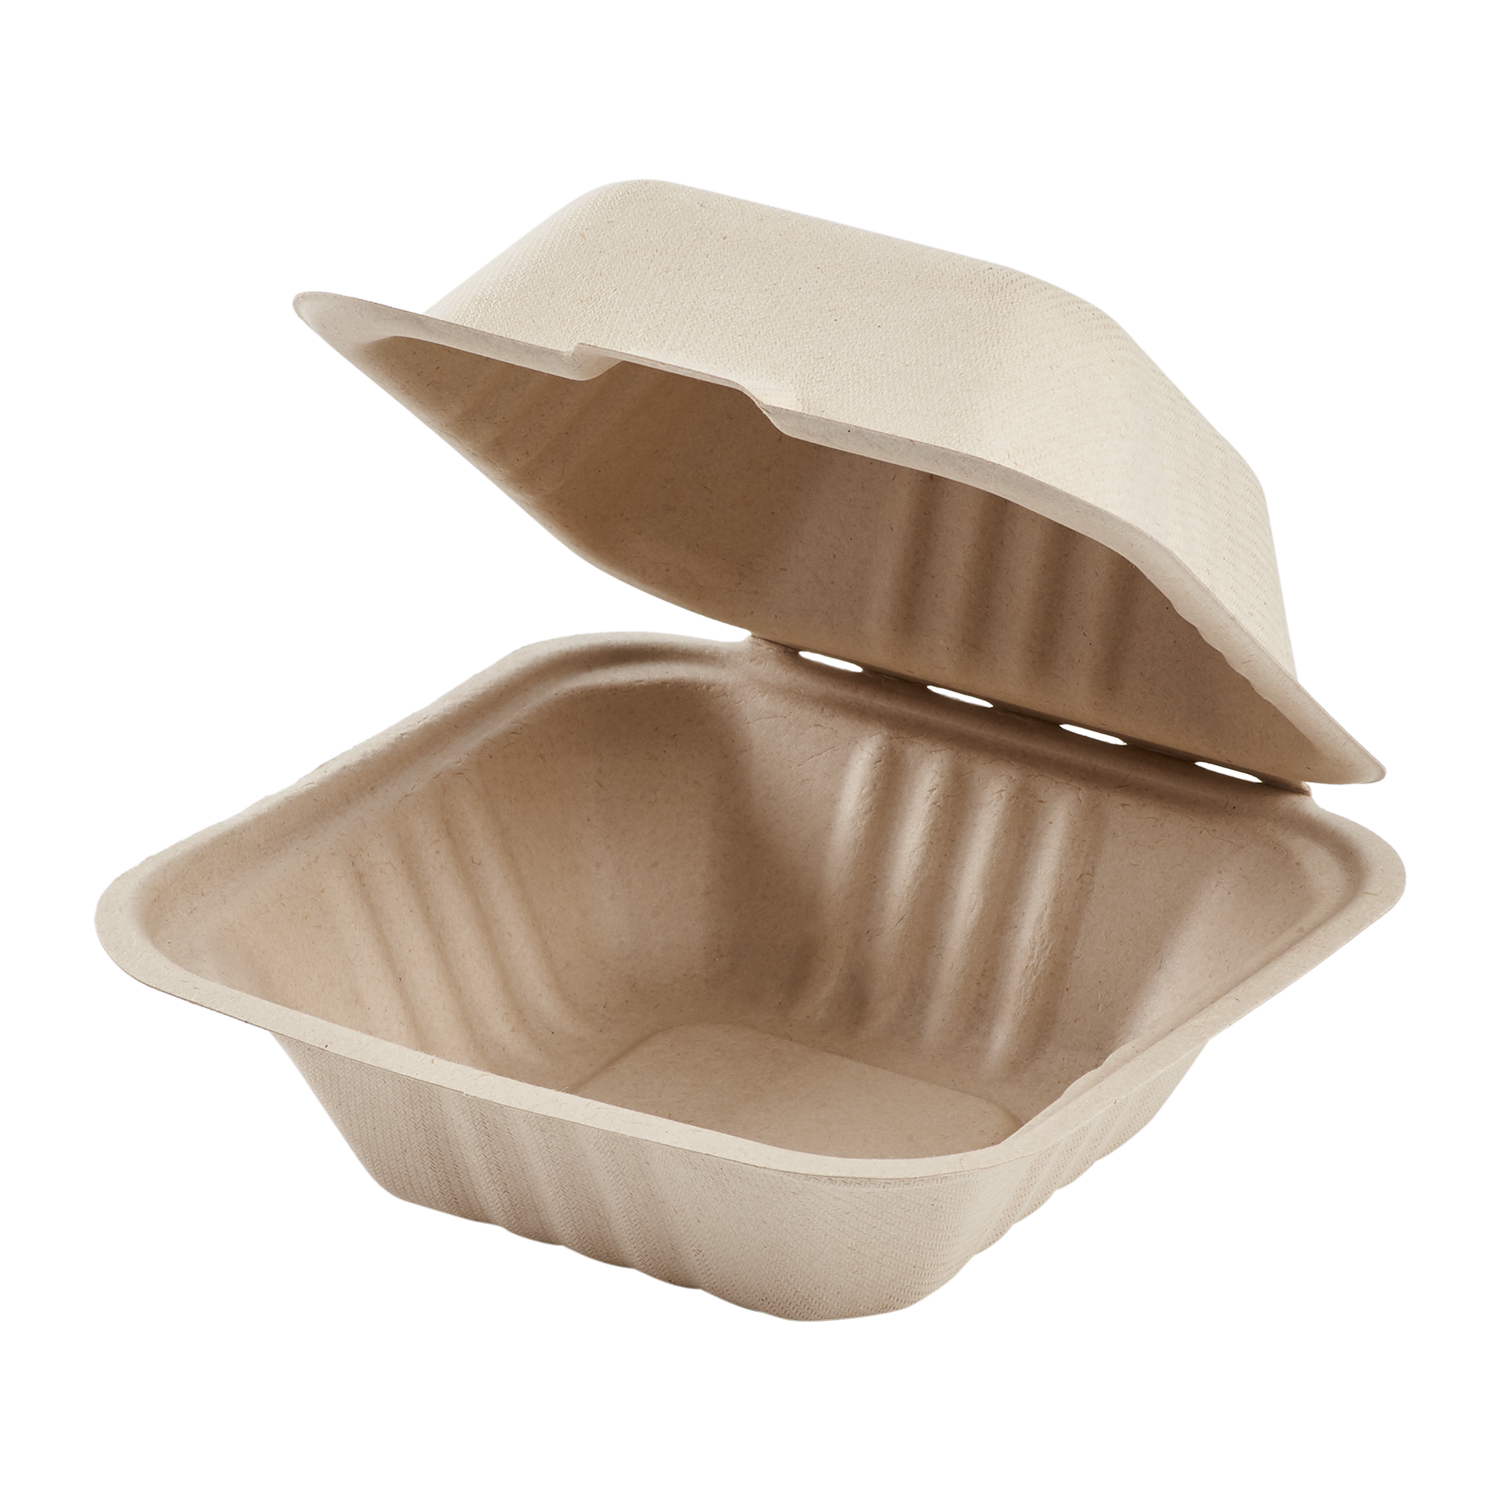 Biodegradable Disposable Kraft Paper Bowls With Lids 32oz